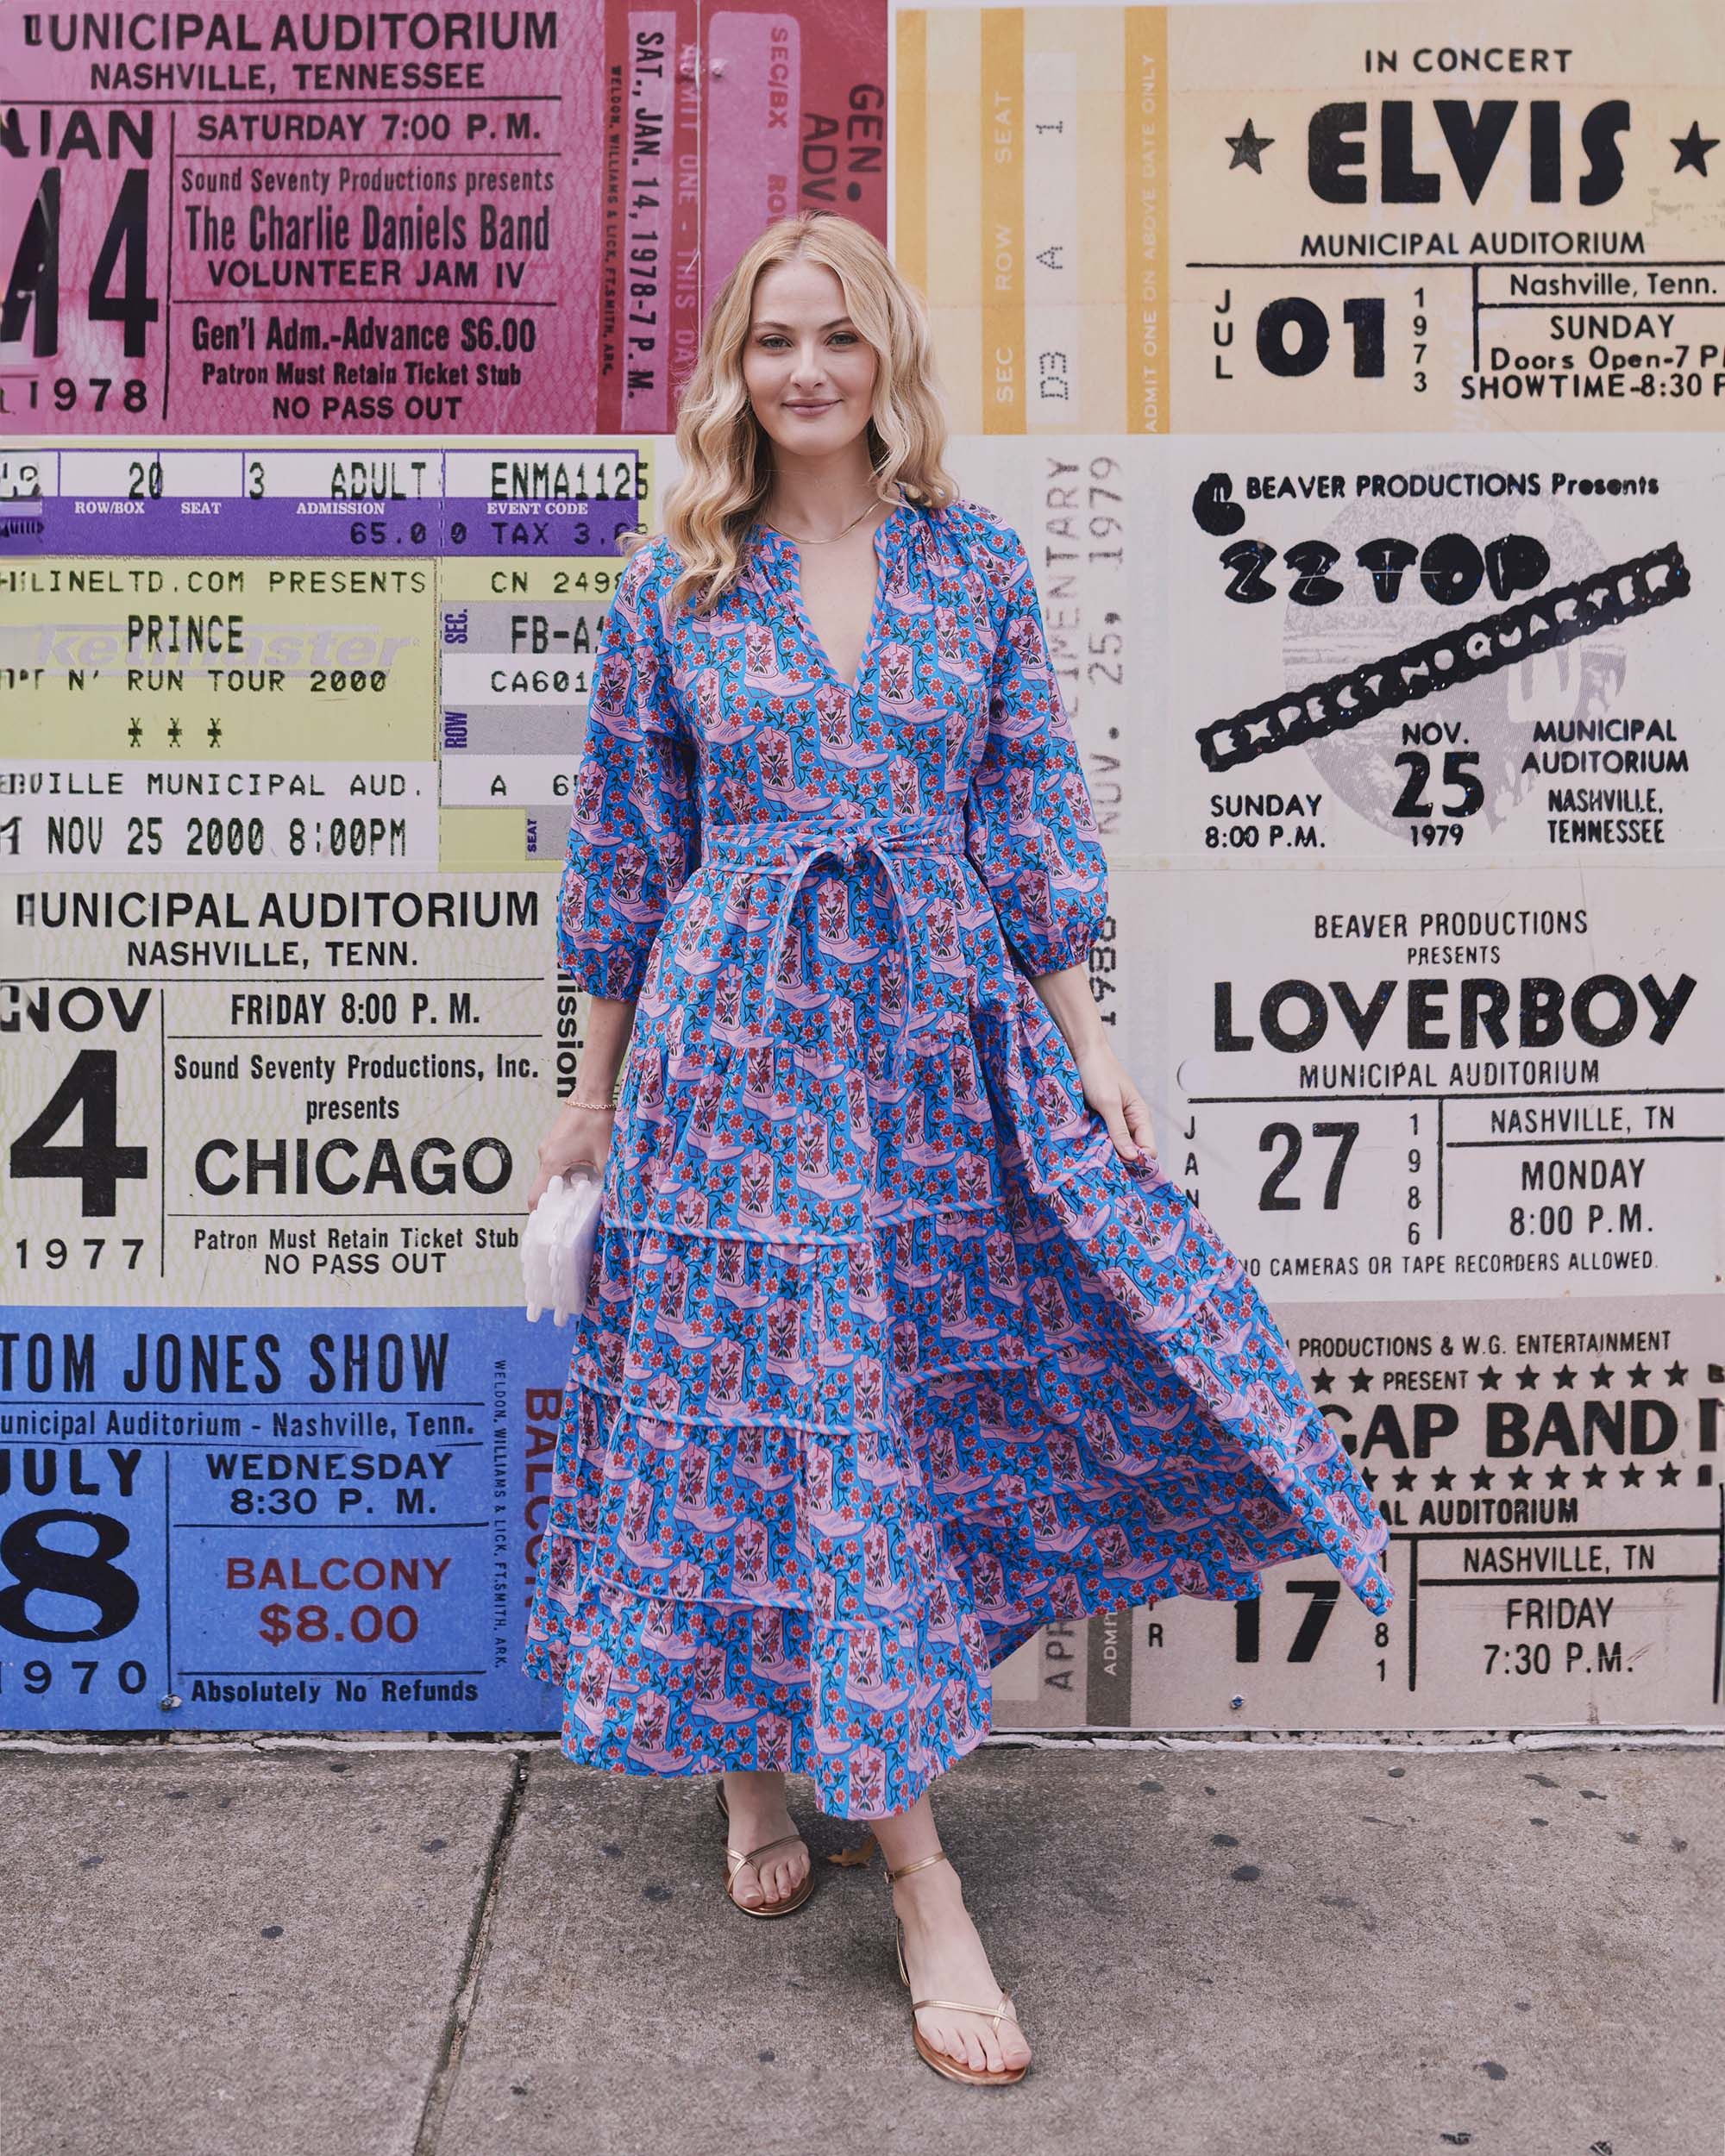 Rhinestone Cowgirl - Main Street Dress - Blue Jean | Printfresh